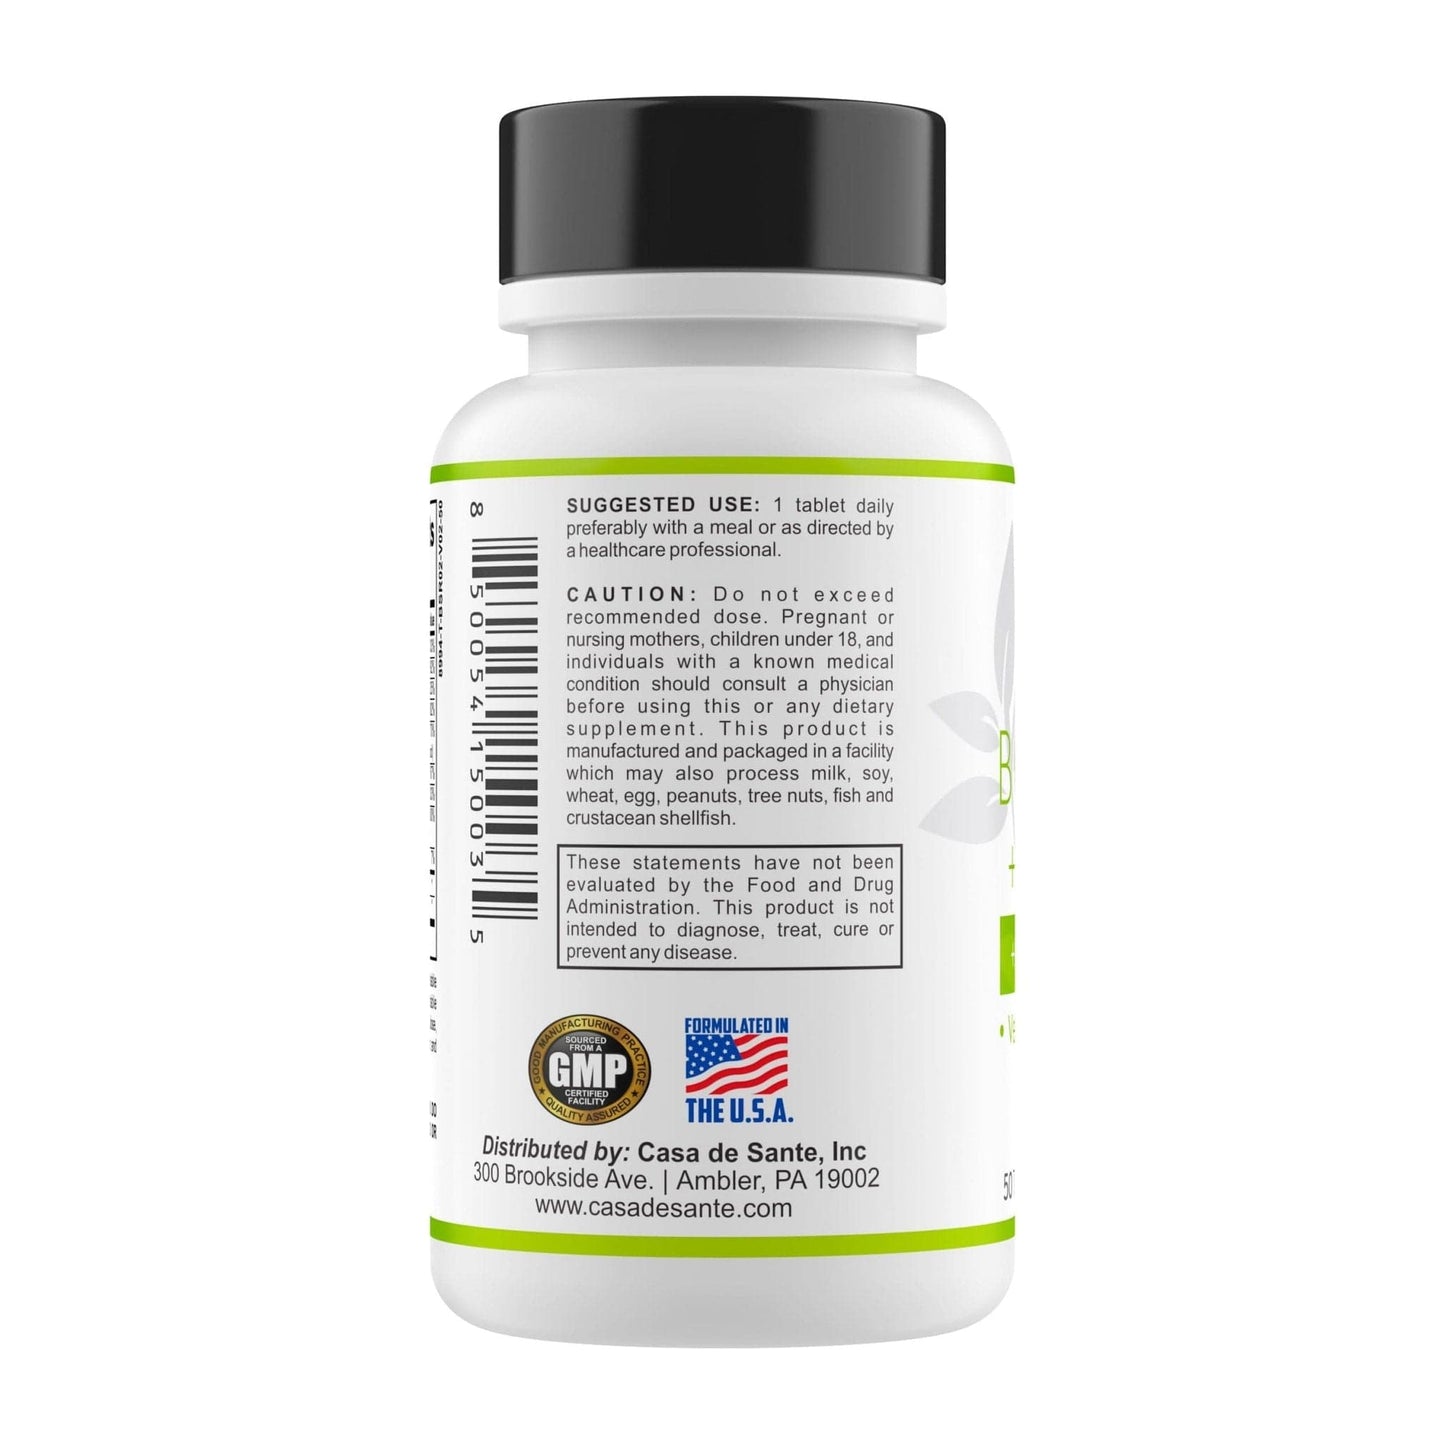 Vitamin B-100 Complex + Inositol + Choline & PABA, Vegan - casa de sante